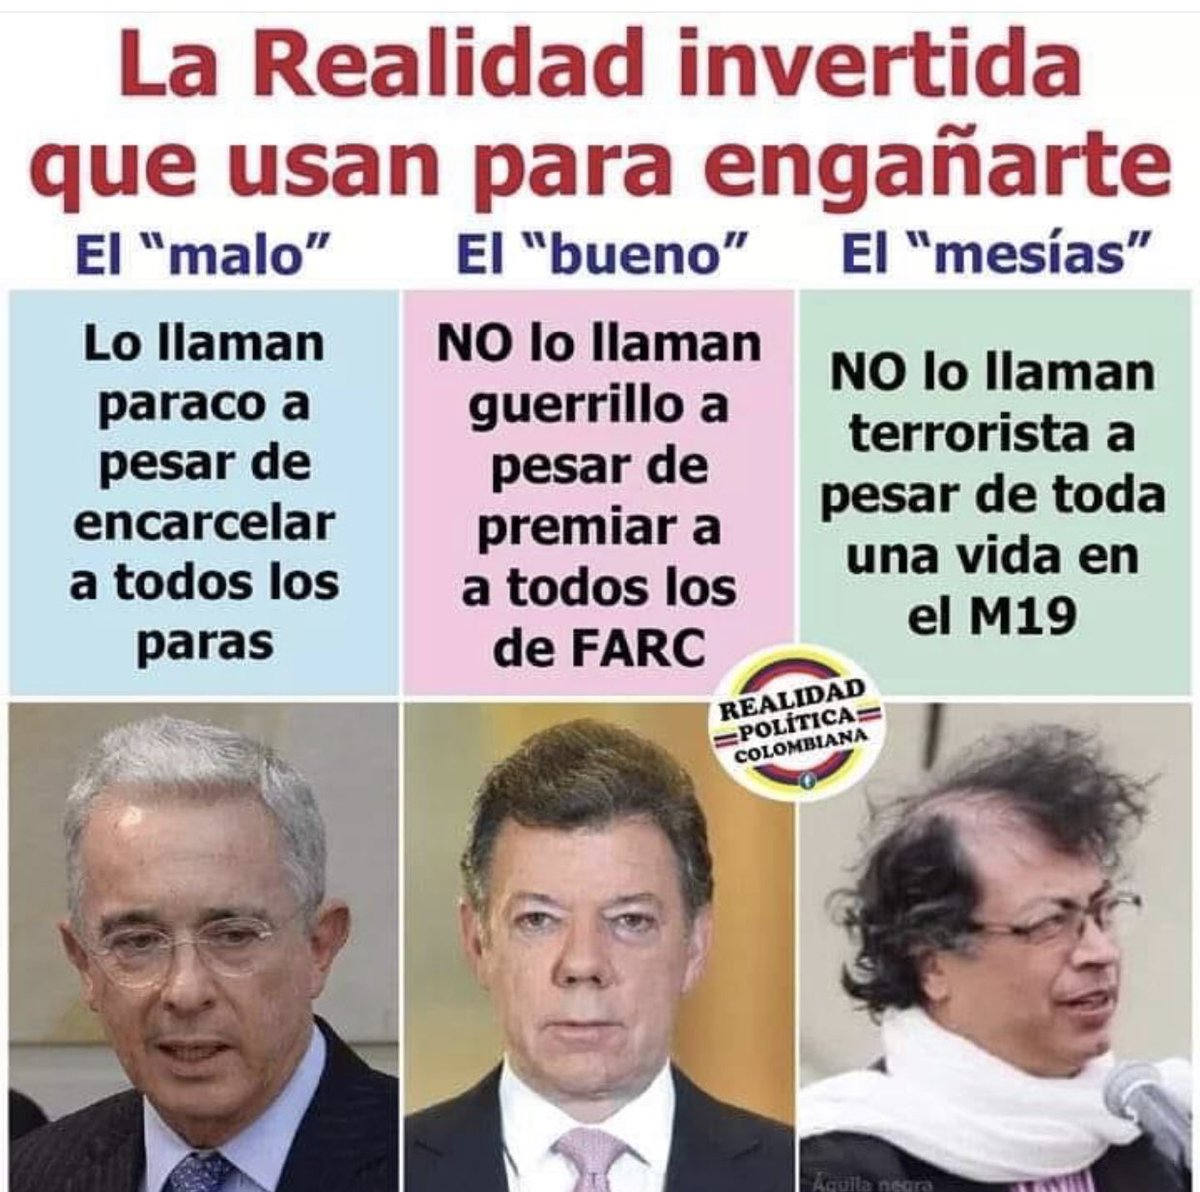 #PetroElPeorPresidenteDeLaHistoria 
#UribeElMejorPresidenteDeLaHistoria